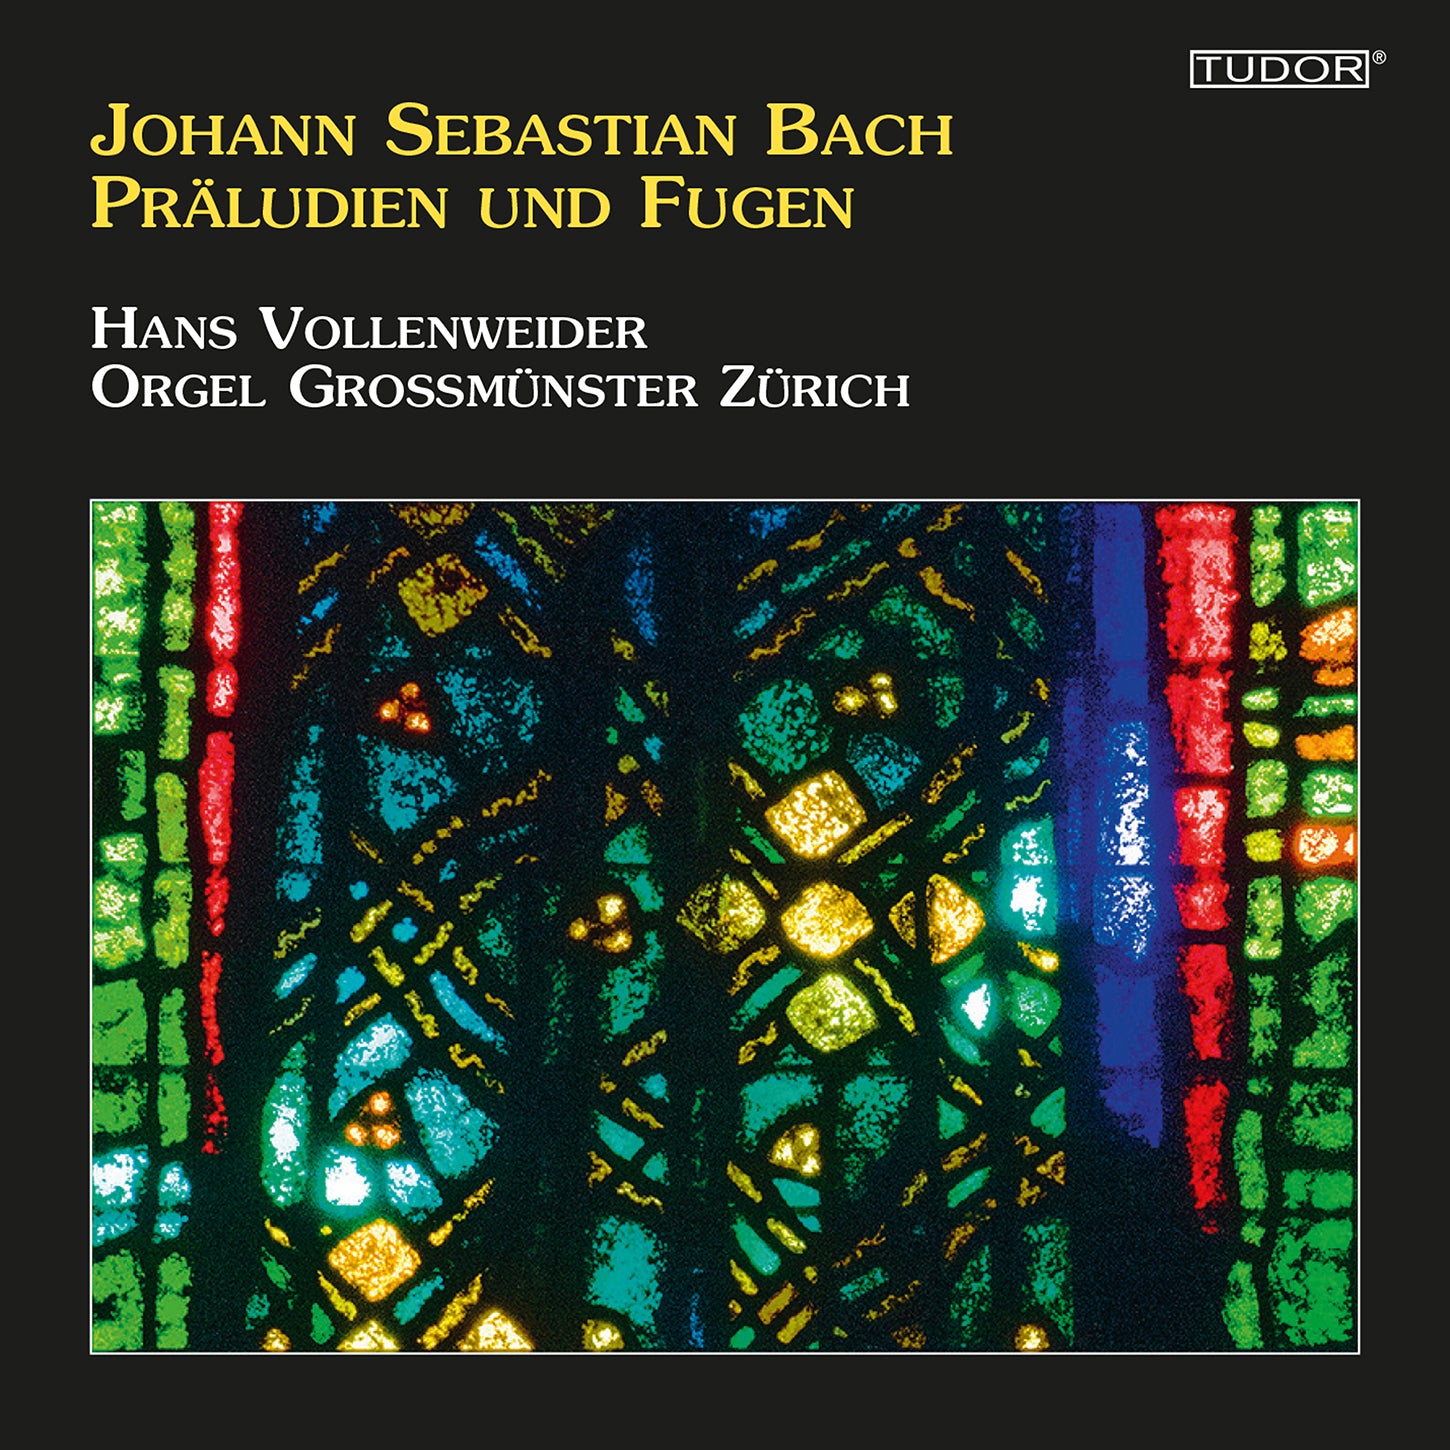 Bach: Preludes & Fugues on the Organ of the Zurich Grossmünster / Vollenweider